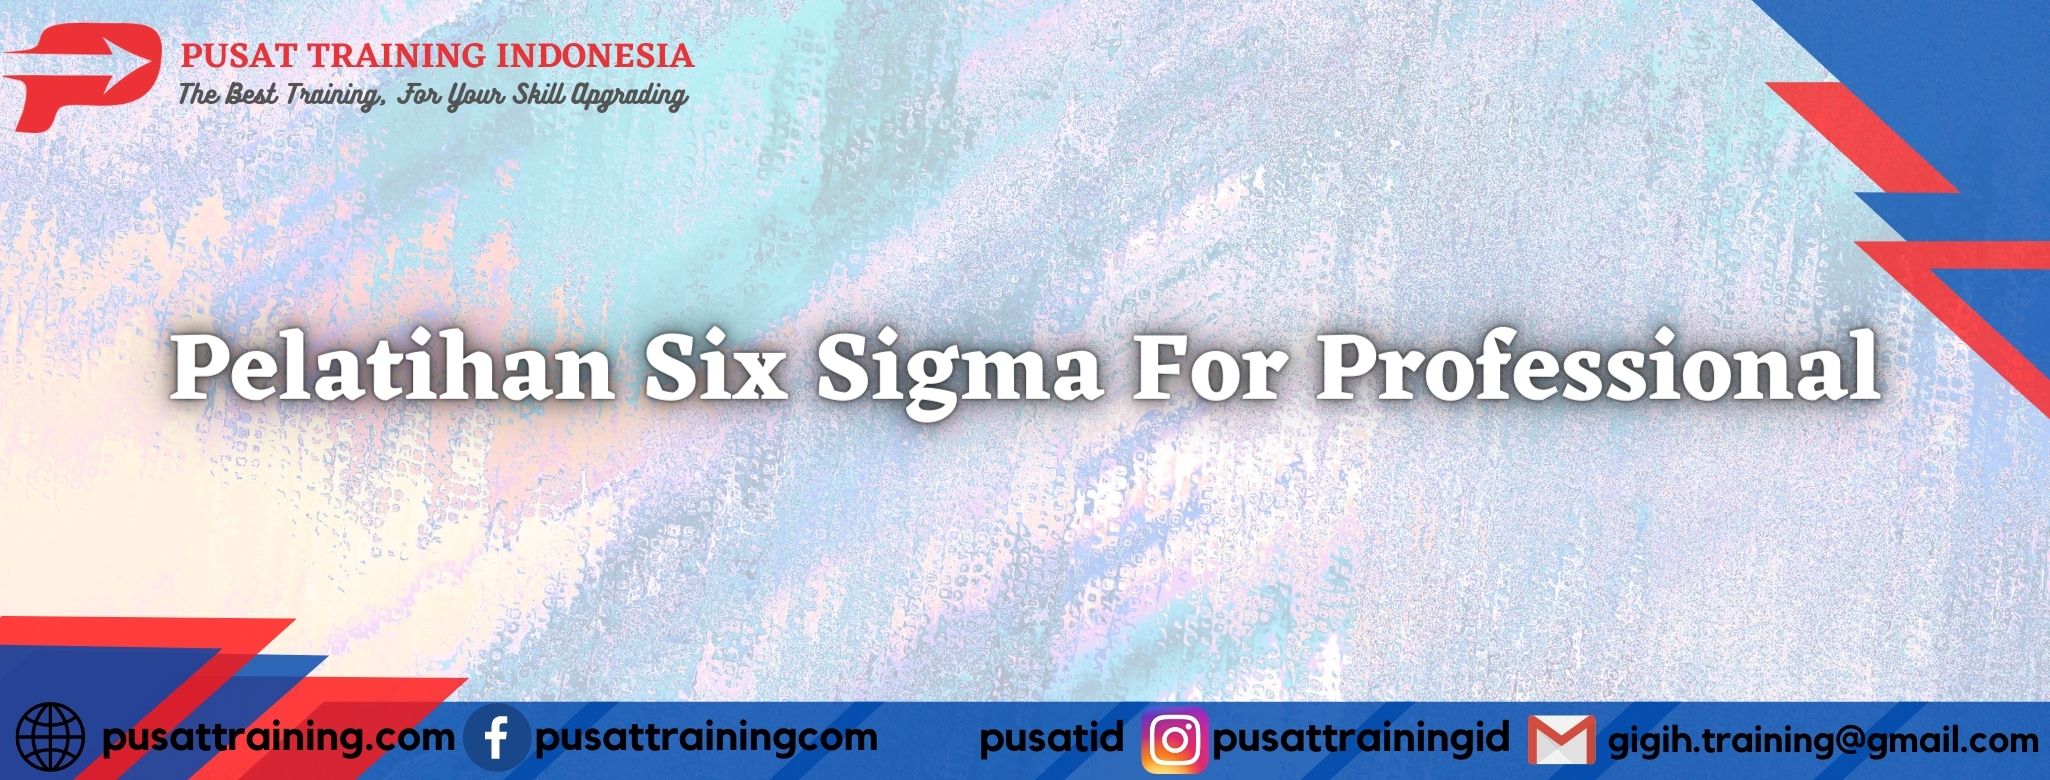 Pelatihan-Six-Sigma-For-Professional